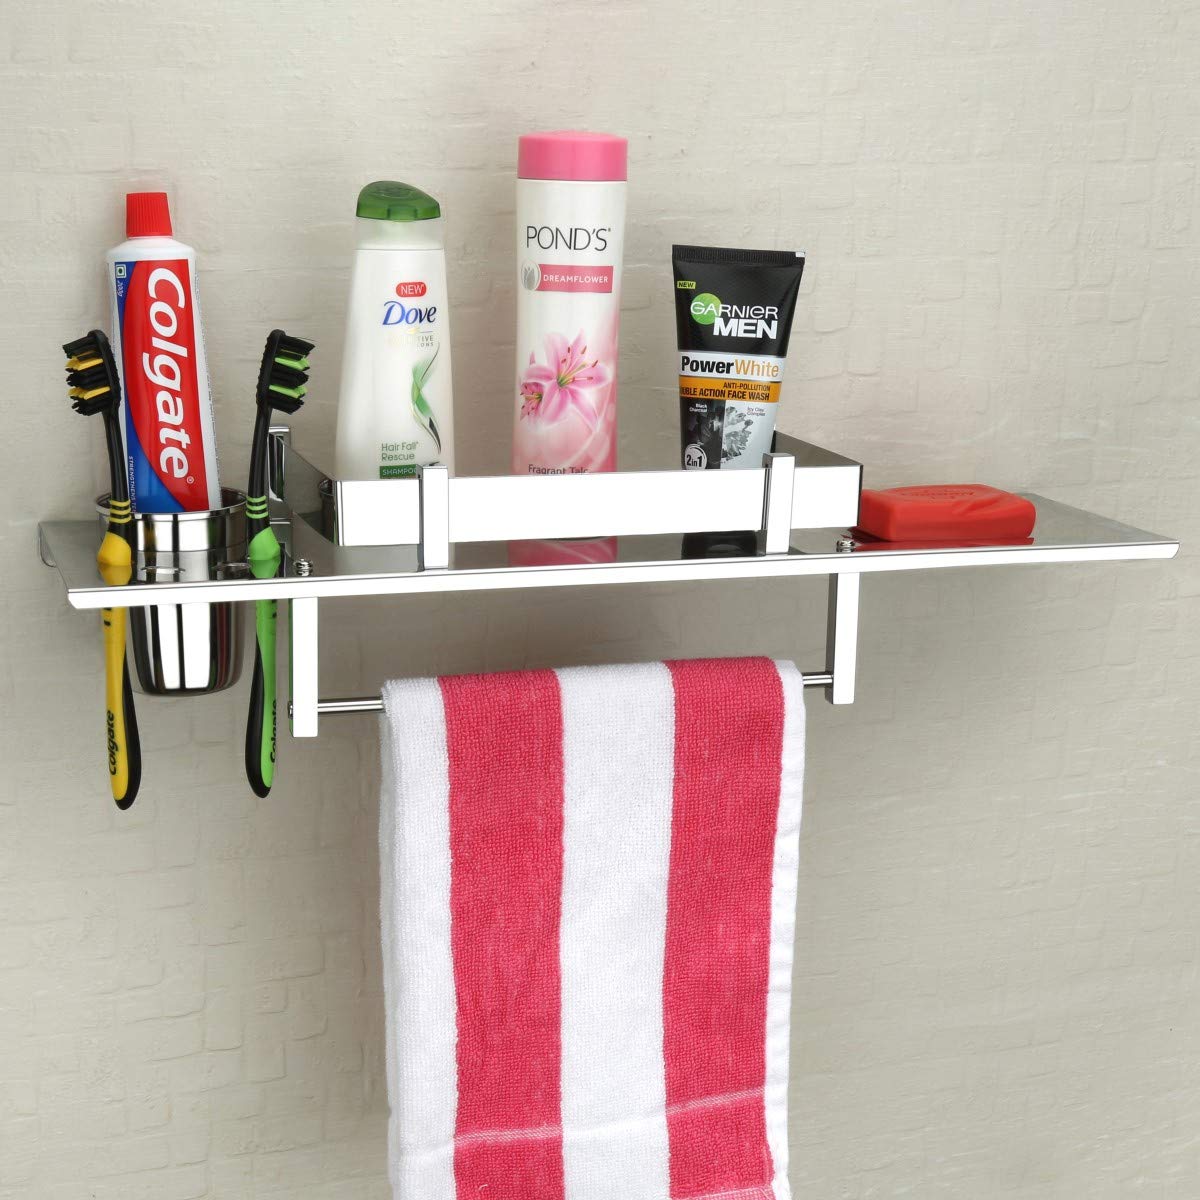 Plantex Stainless Steel 4in1 Multipurpose Bathroom Shelf/Rack/Towel Hanger/Tumbler Holder/Soap Dish/Bathroom Accessories (18 x 5 Inches) - Pack of 1